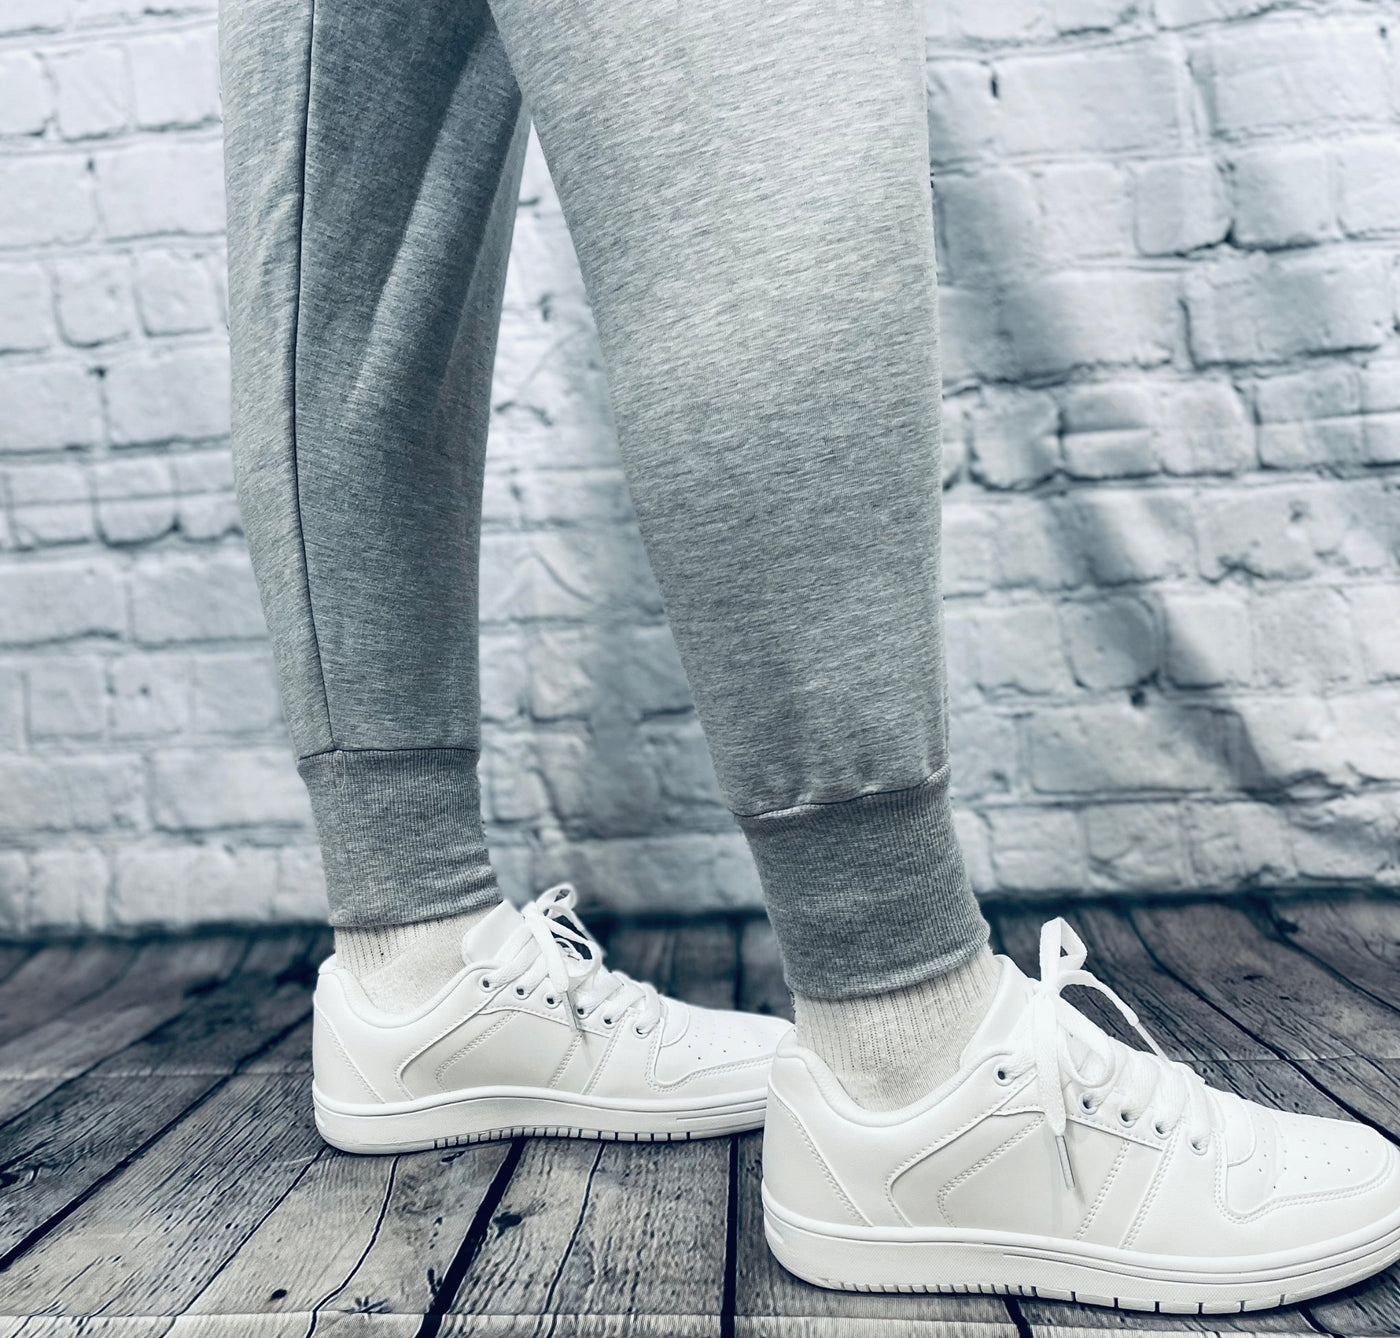 Pantalons de jogging « Gris » - Dérive ecobrand